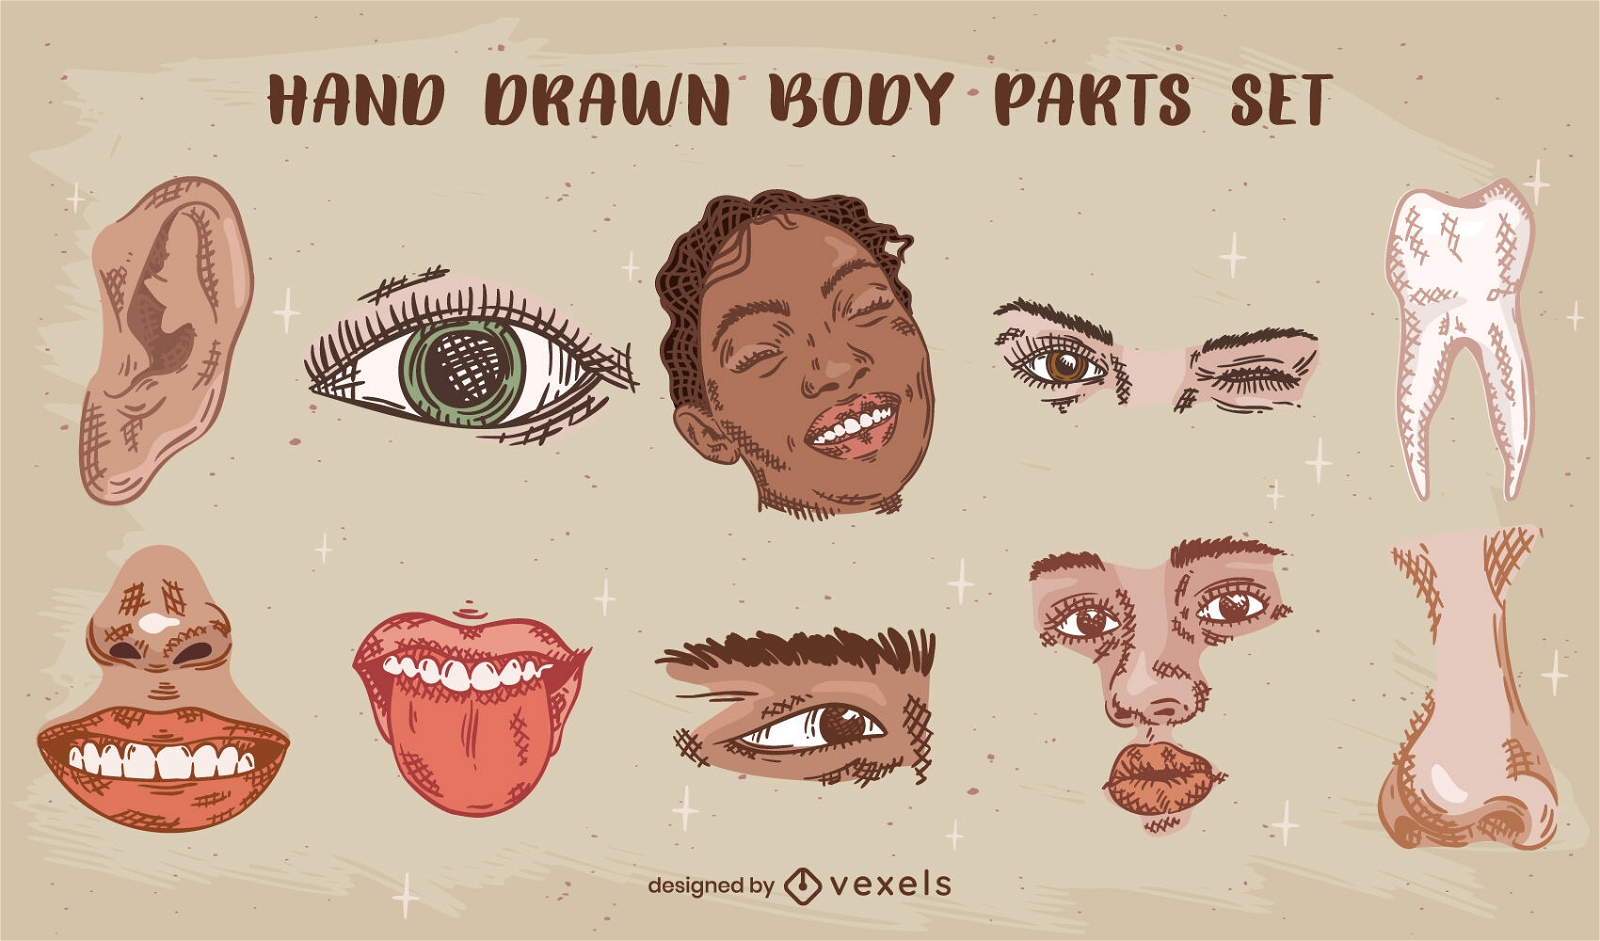 Hand drawn body parts set